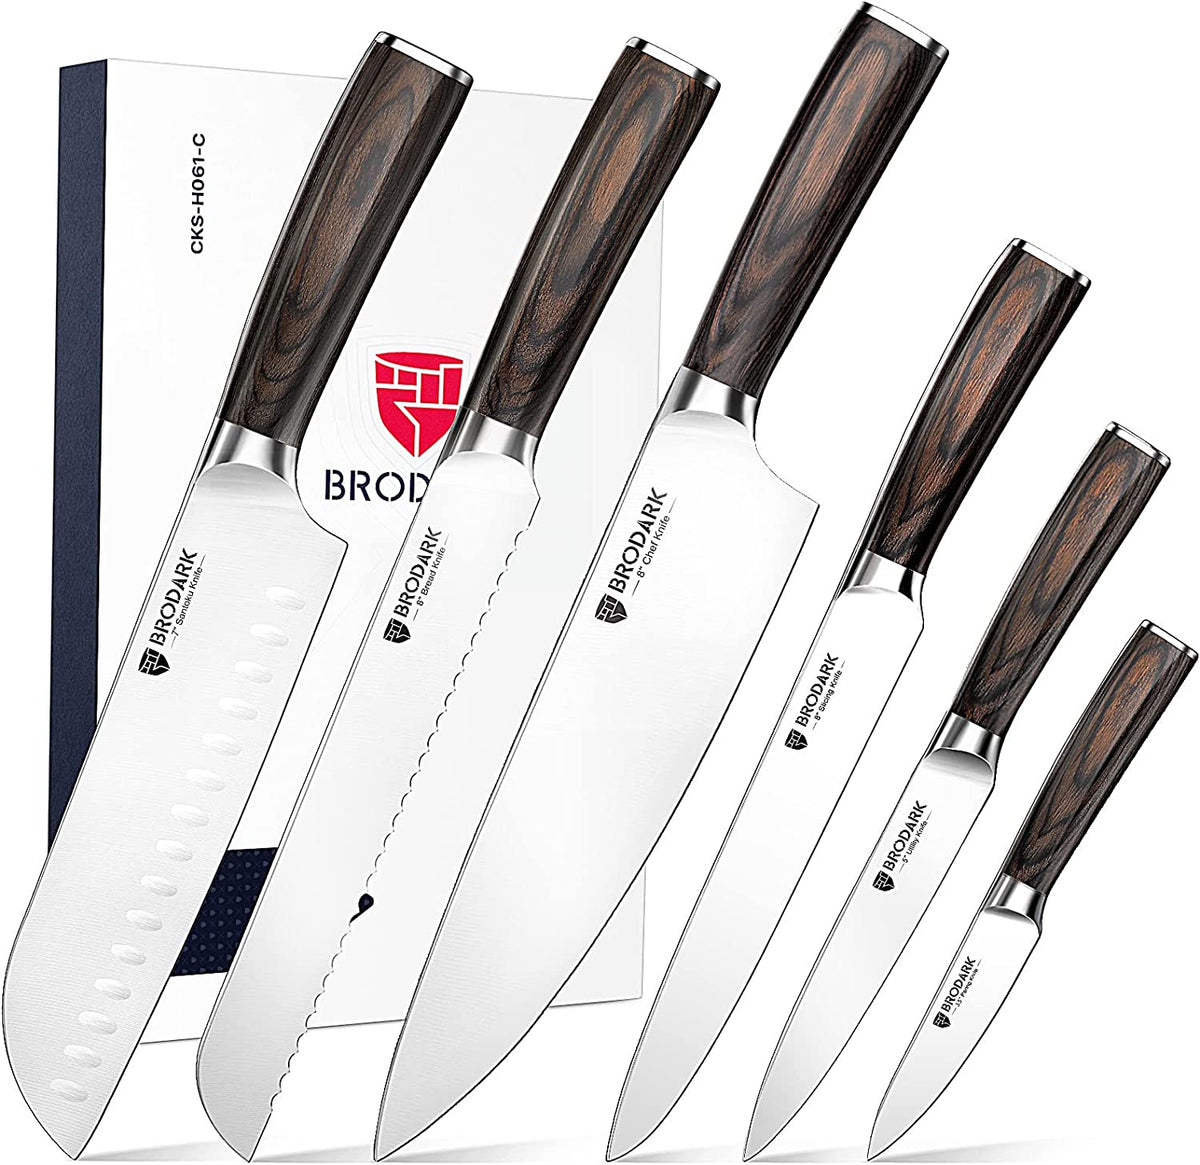 15 Piece Professional Chef Knife – brodarkhome